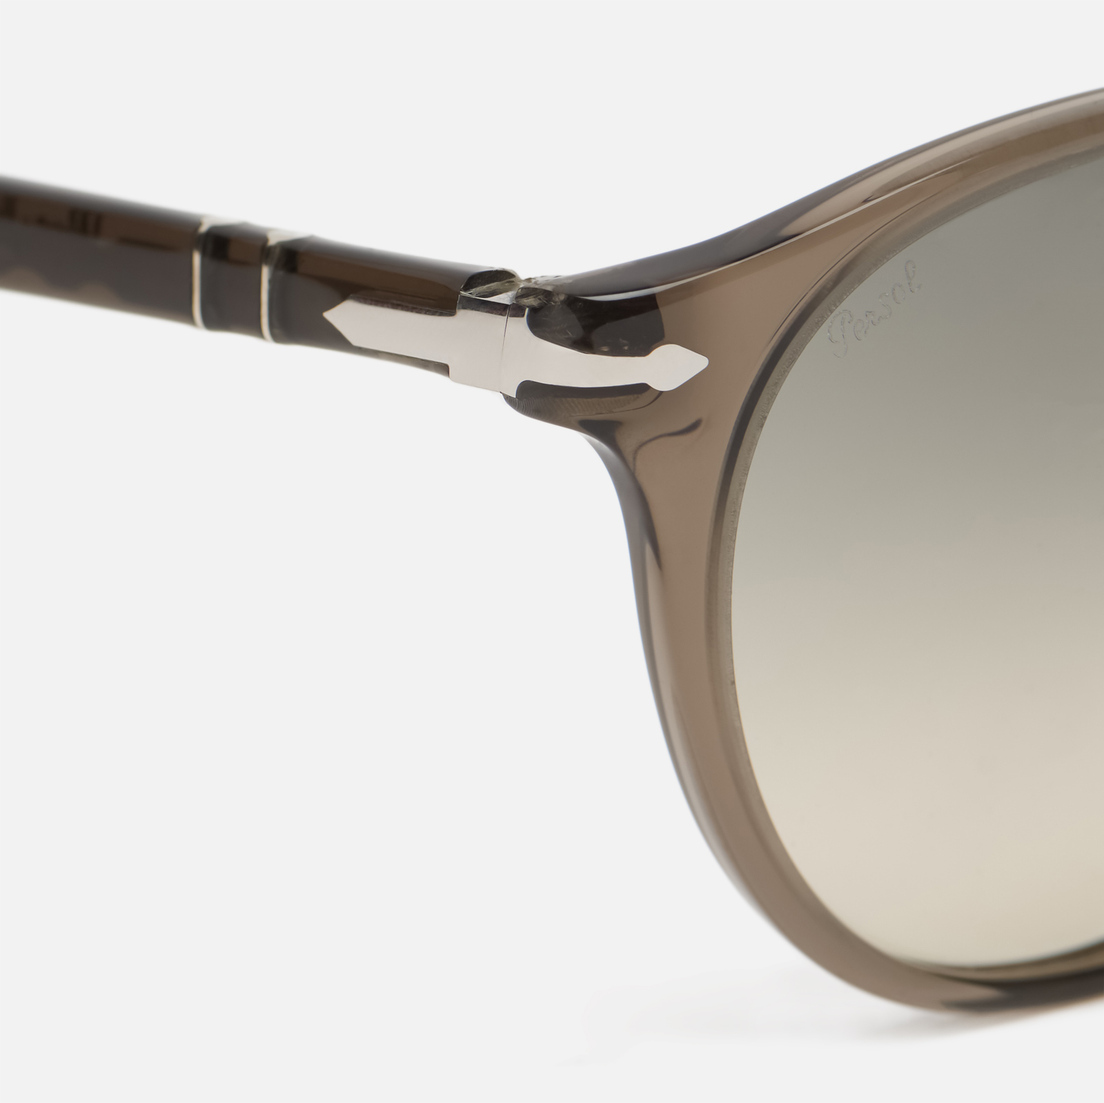 Persol Солнцезащитные очки PO3152S Galleria '900